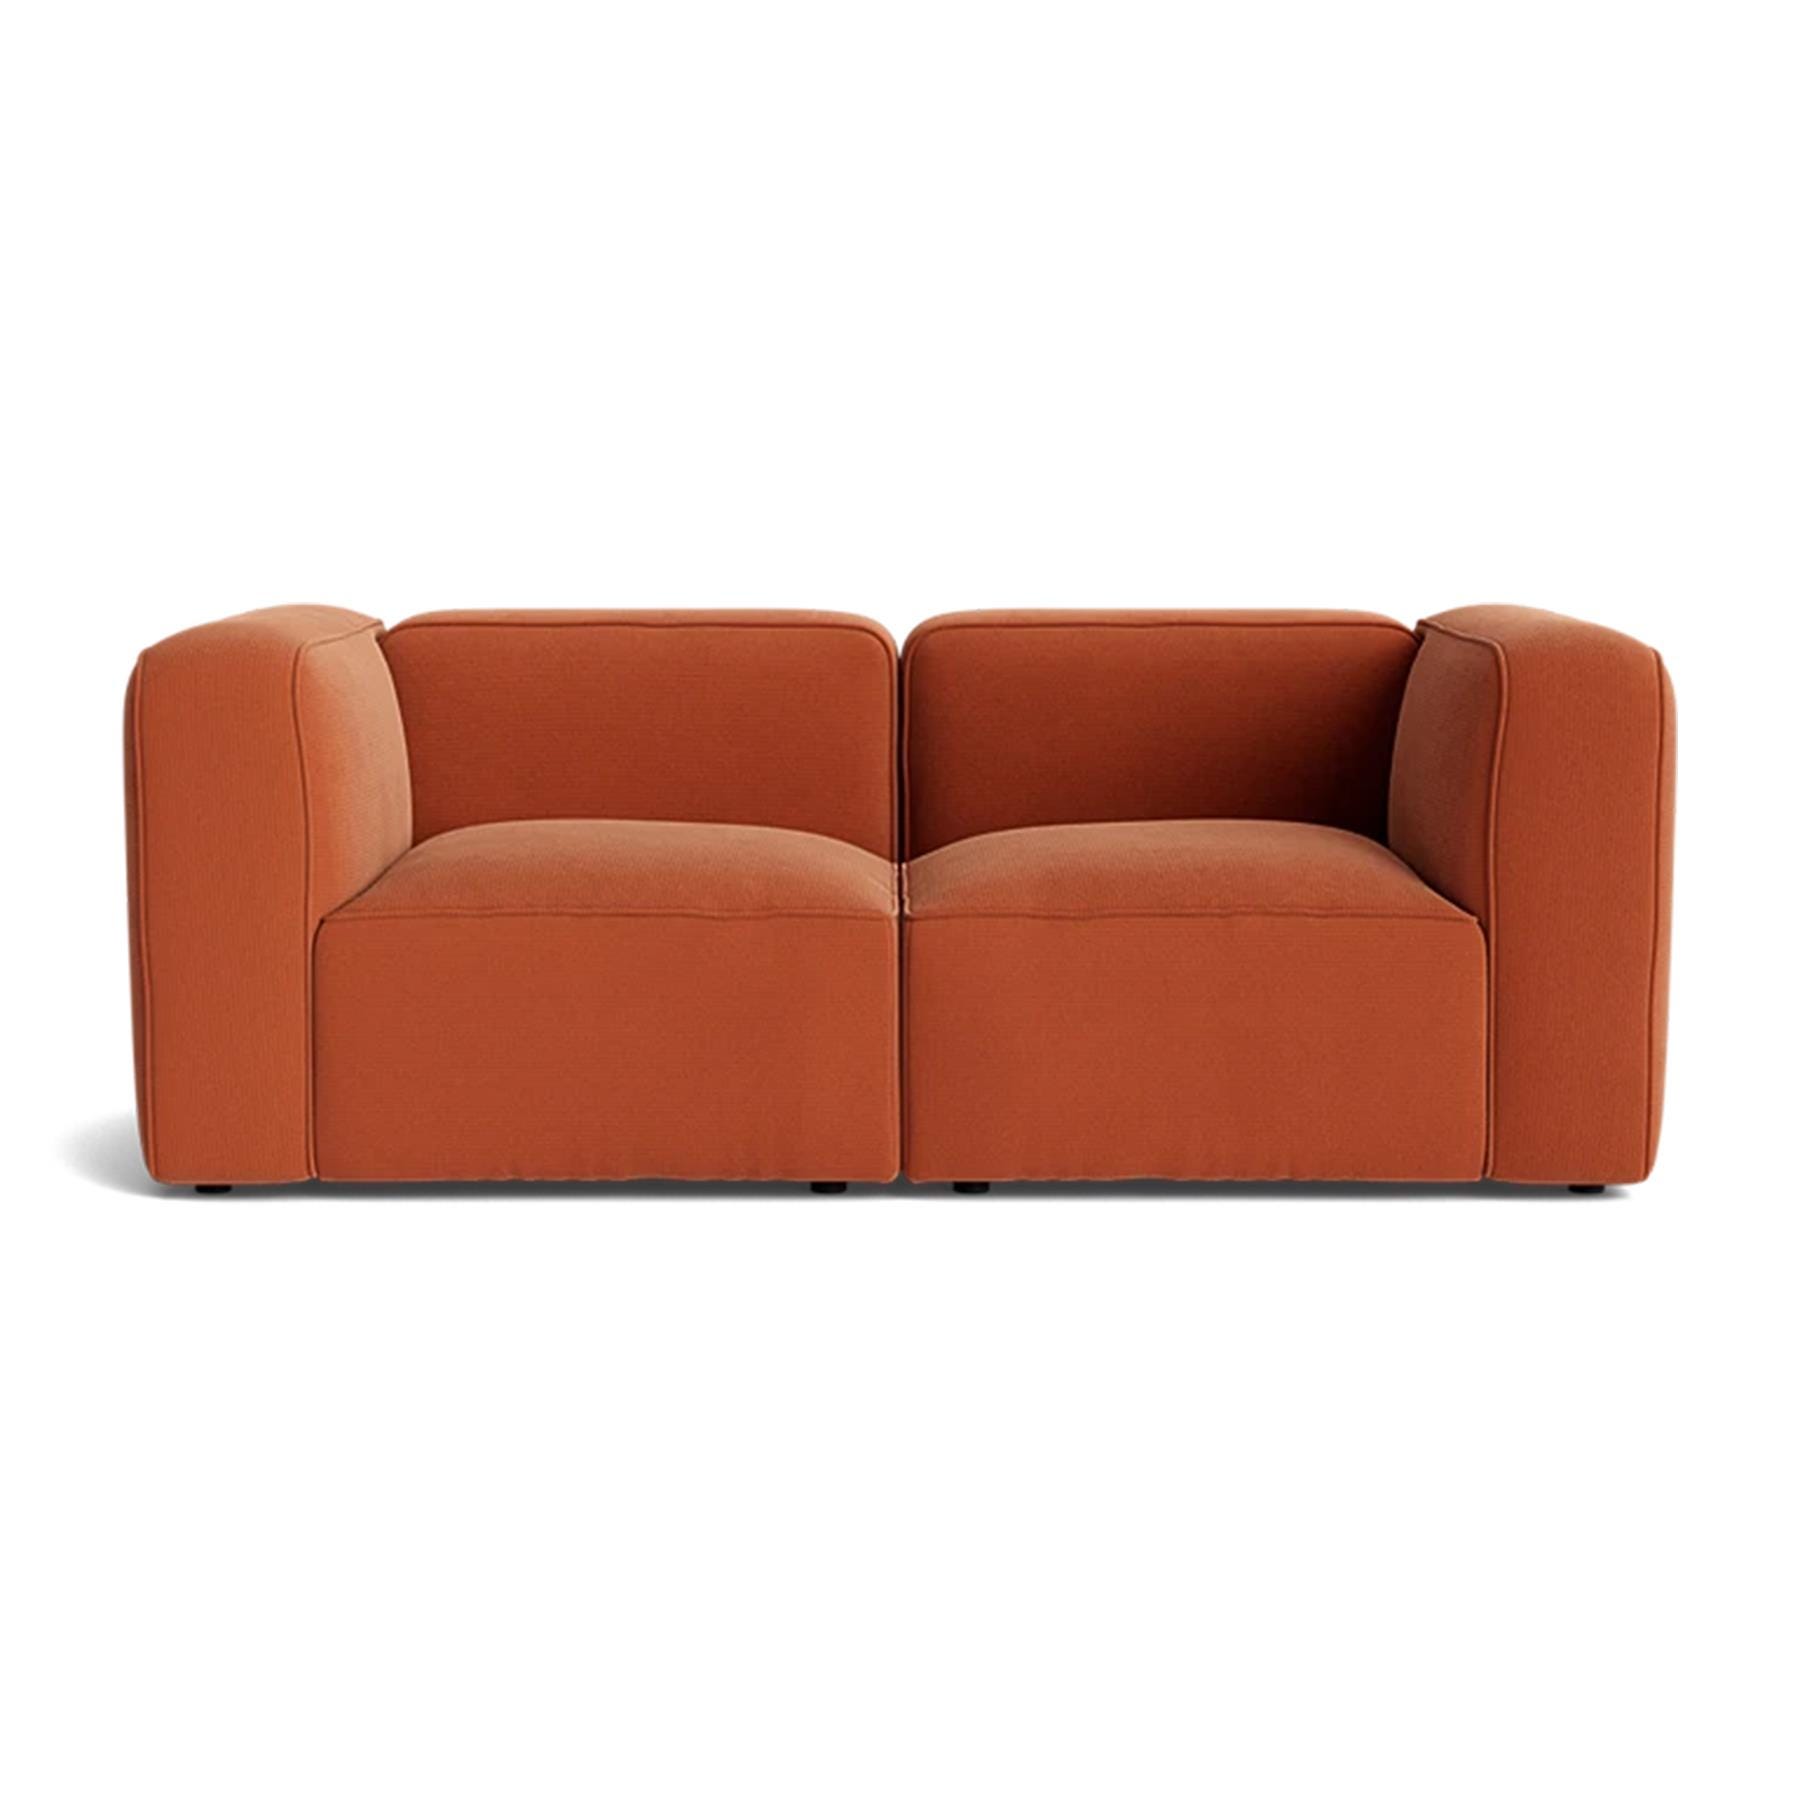 Make Nordic Basecamp 2 Seater Sofa Nordic Velvet 100 Orange Designer Furniture From Holloways Of Ludlow